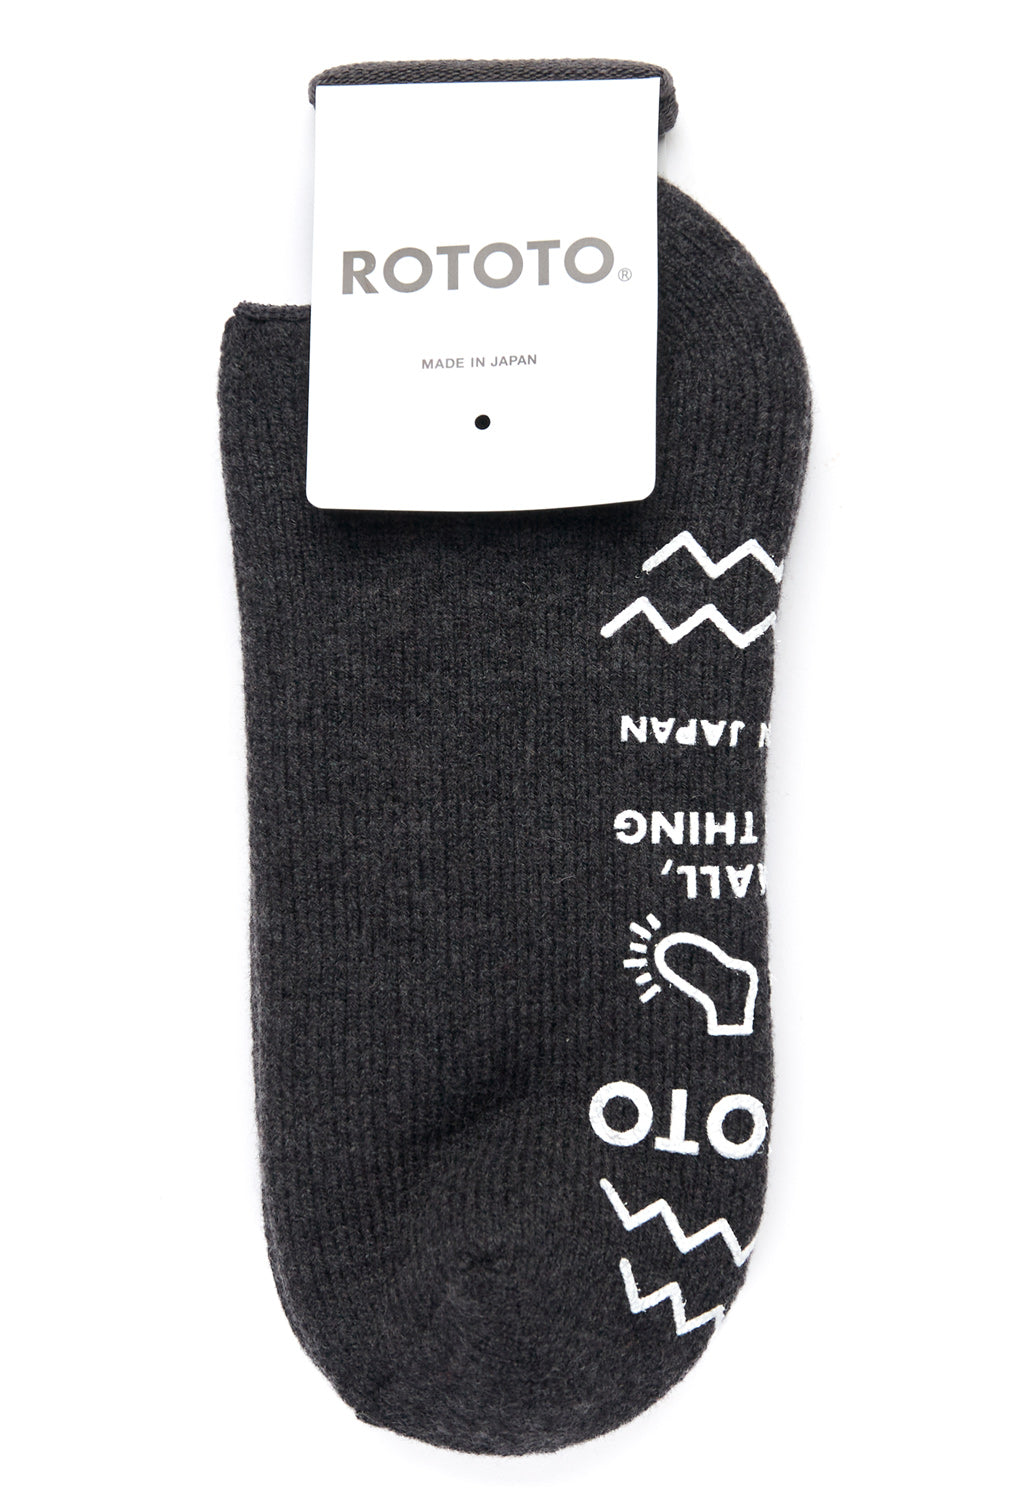 ROTOTO Pile Sock Slippers - Charcoal